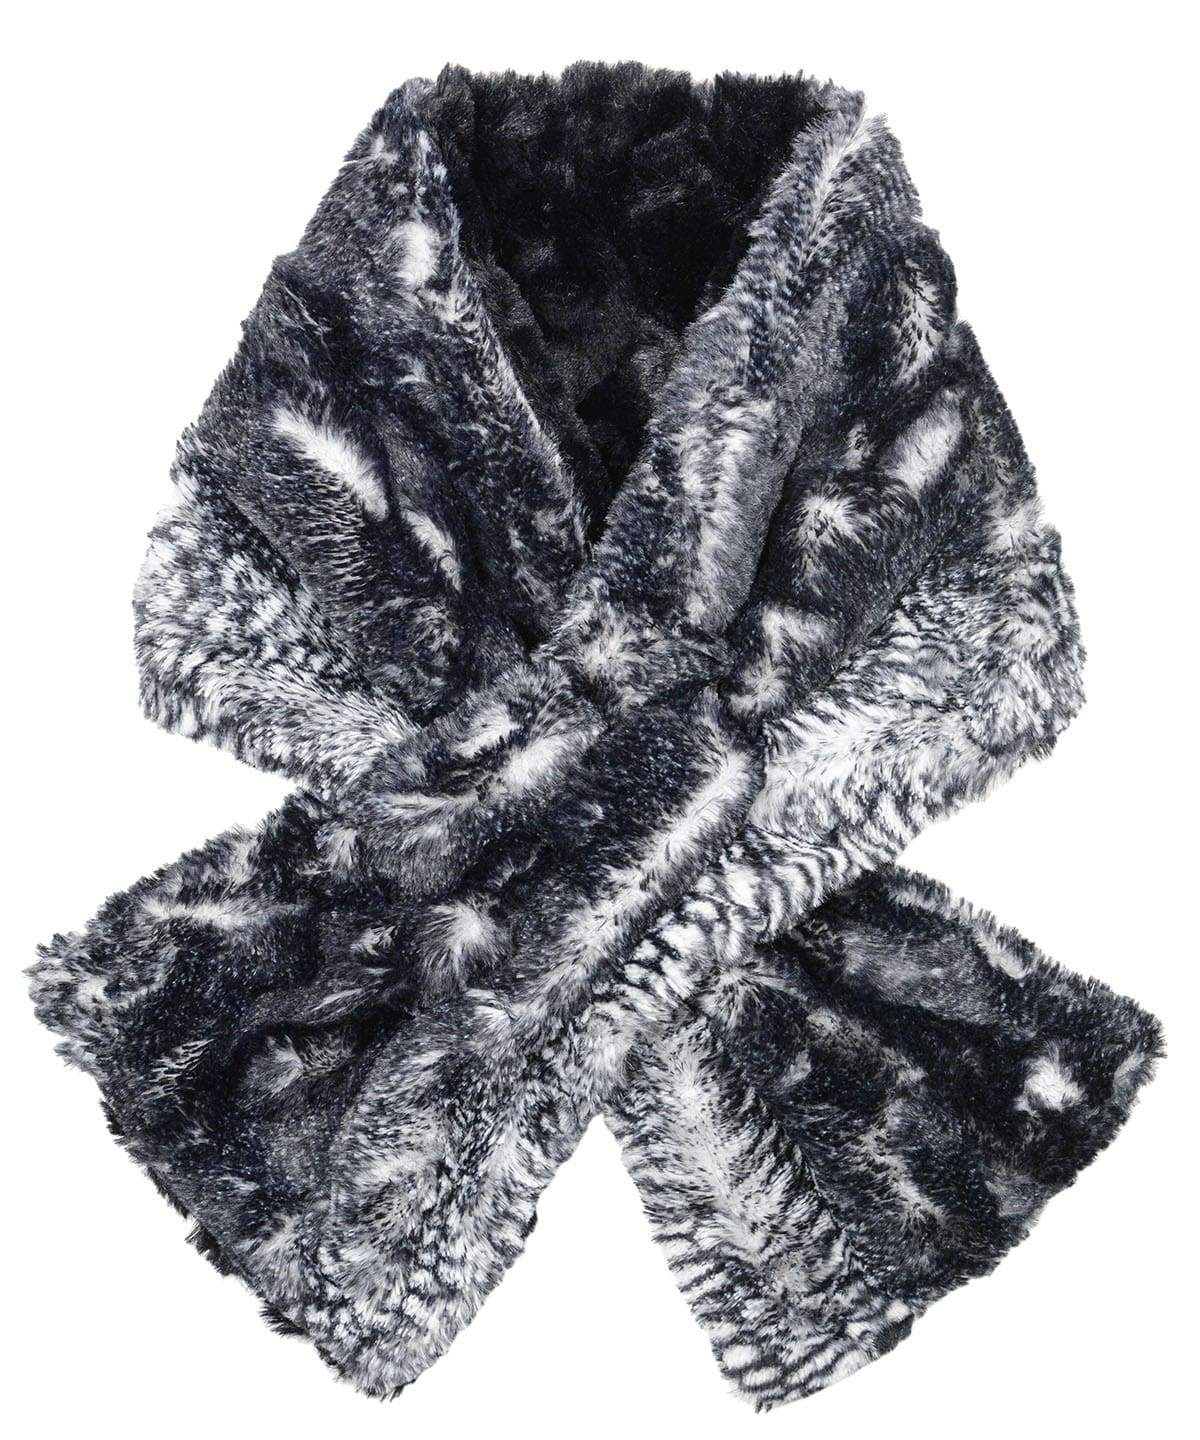 Black Fluffy Fox Fur Knit Pull-Thru Scarf for Men